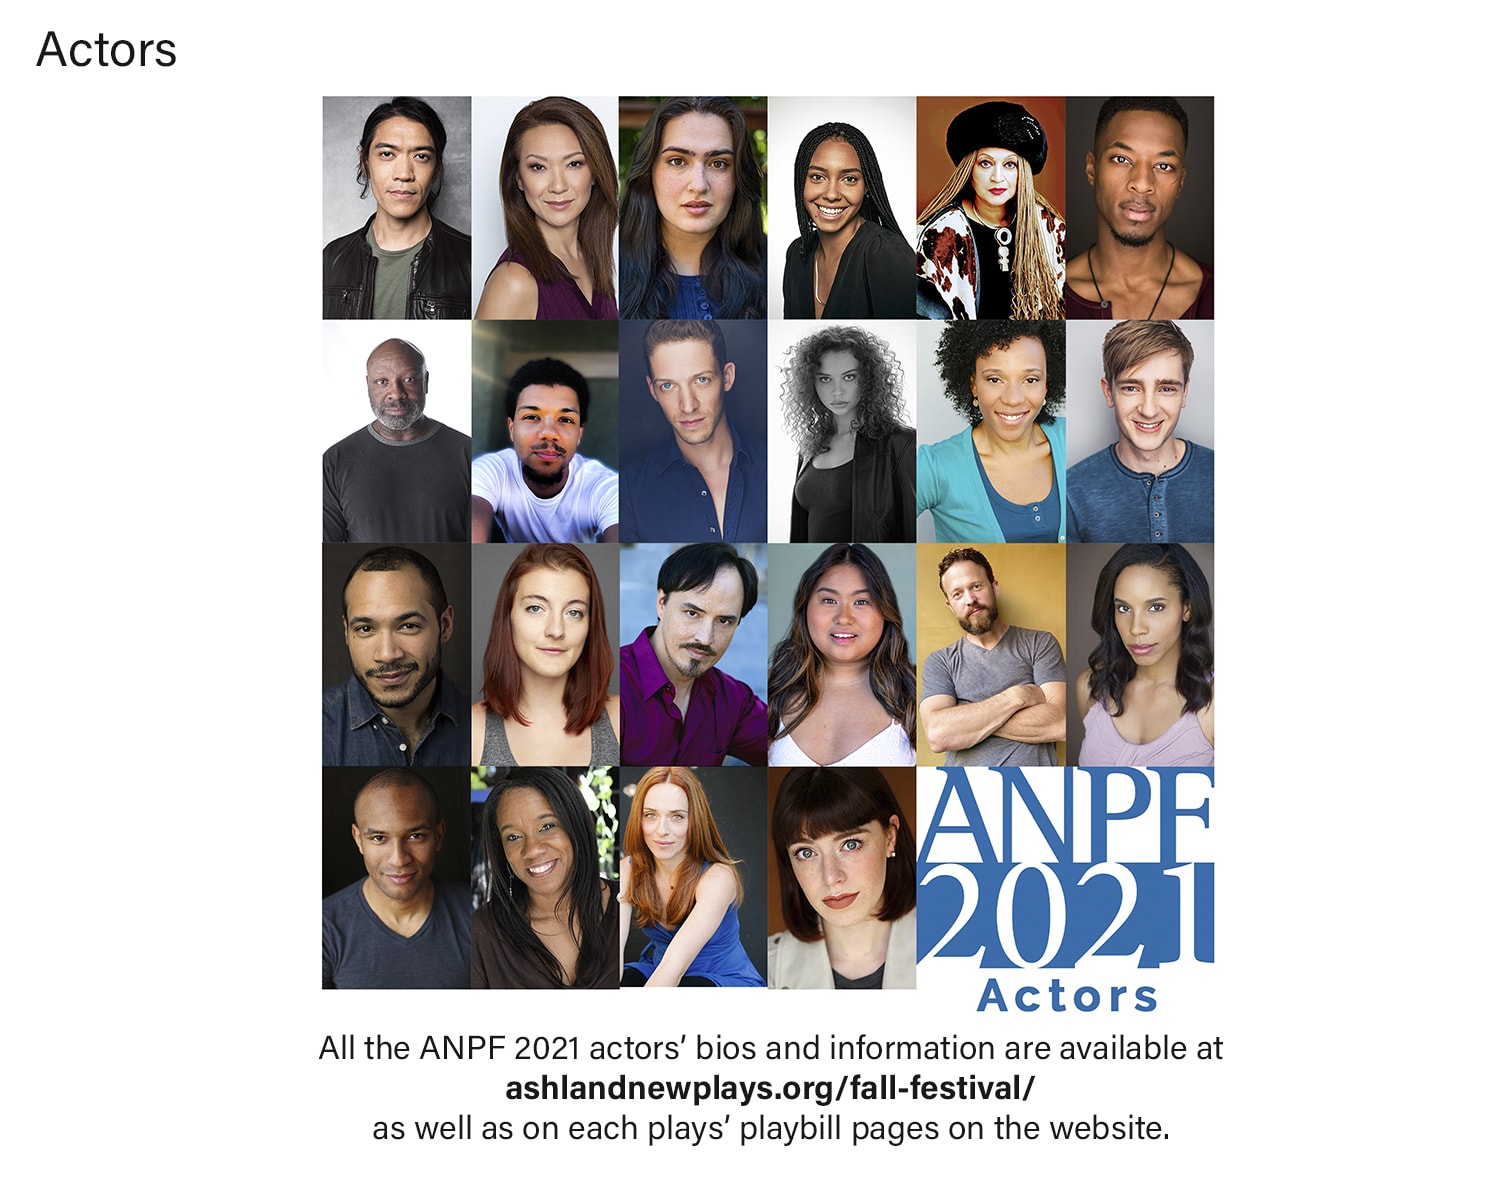 ANPF 2021 18 19 Actors Page